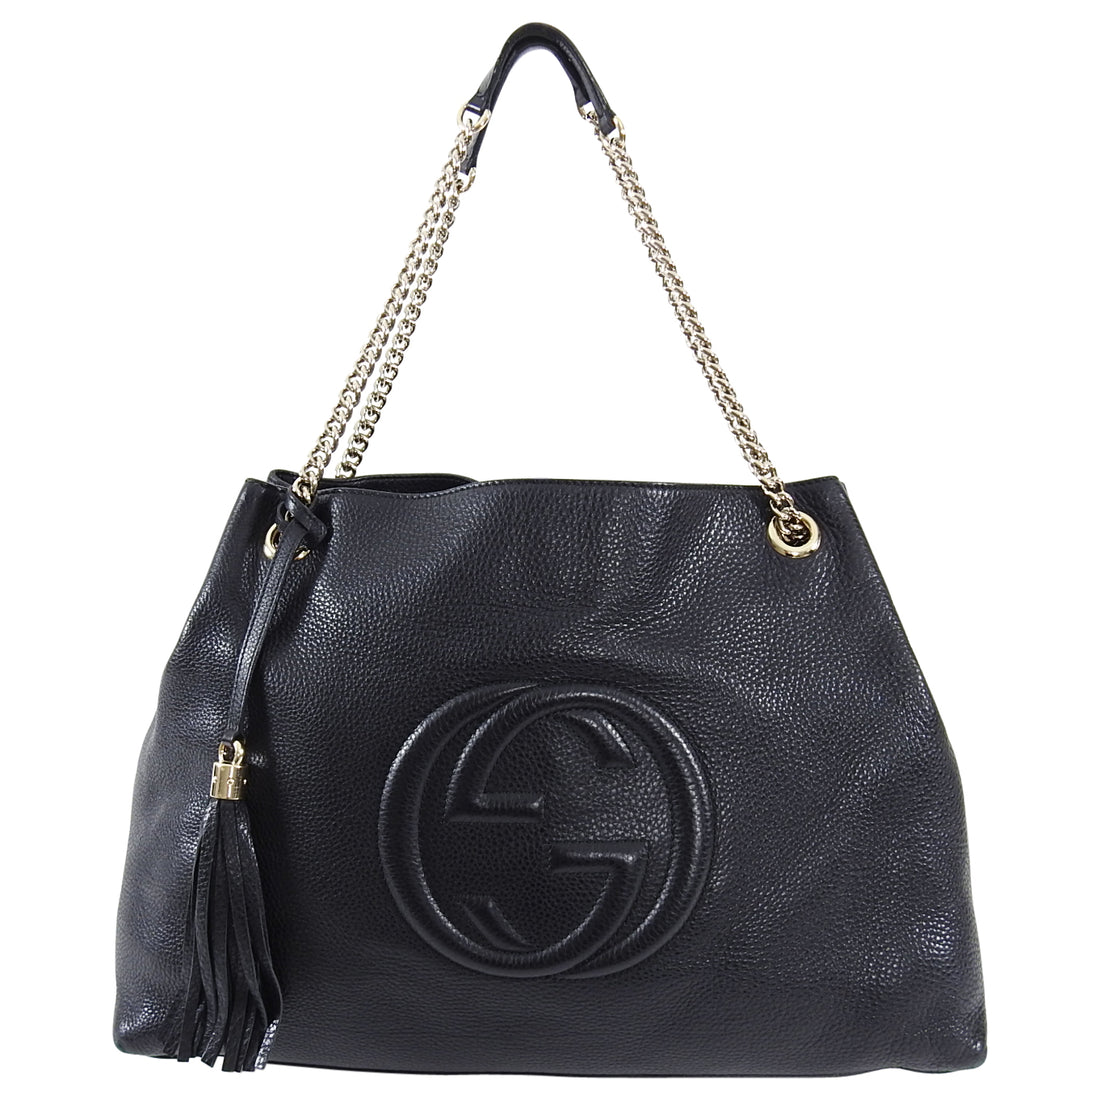 Gucci Black Leather Large GG Logo Soho Chain Tote Bag